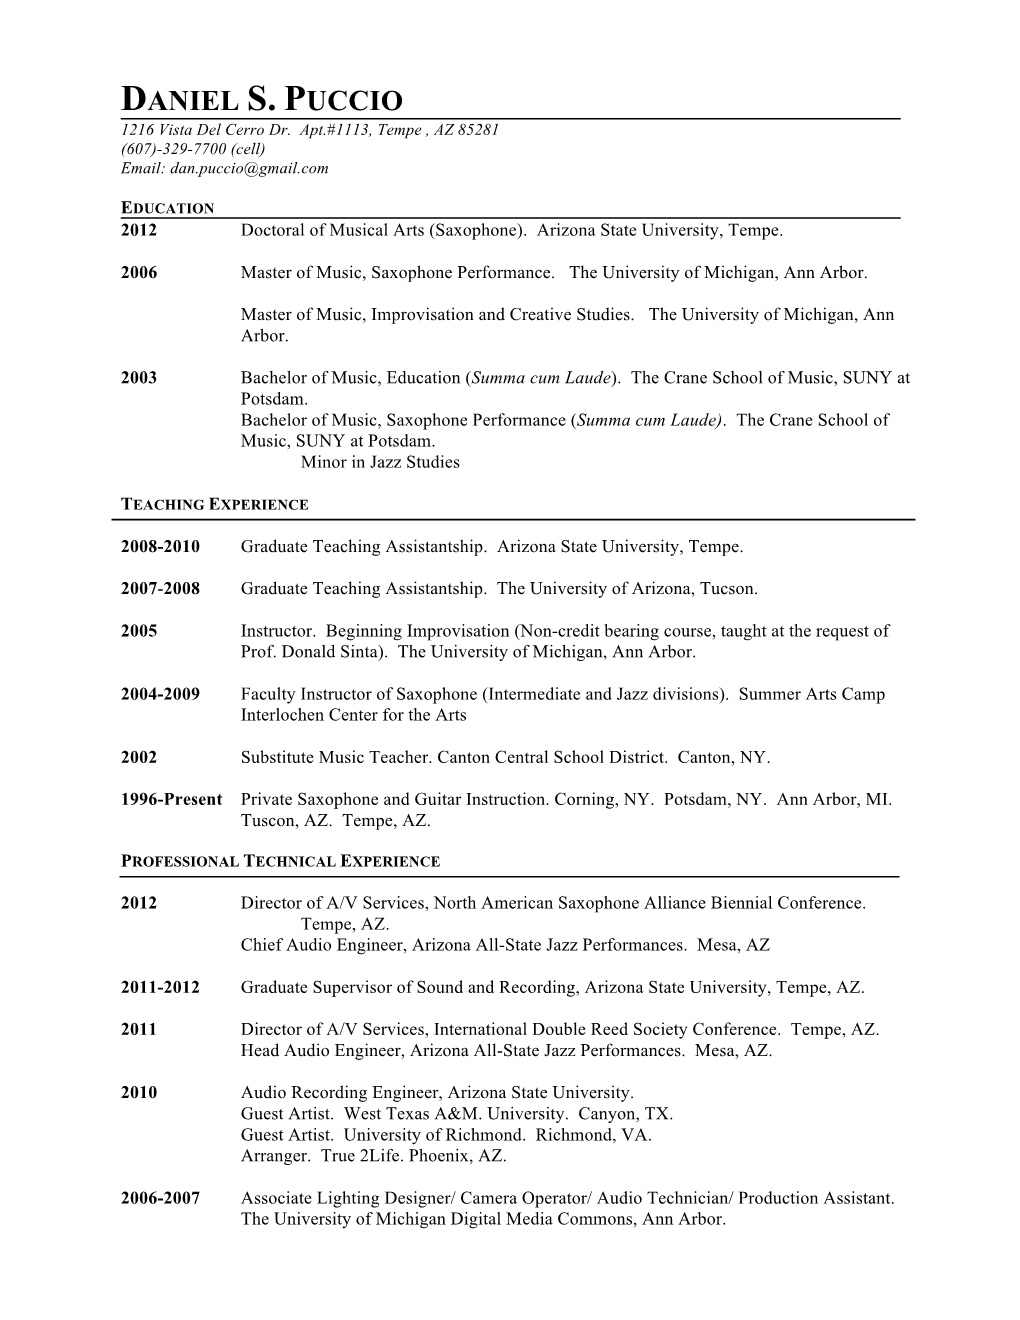 Resume Updated 03-1-2012